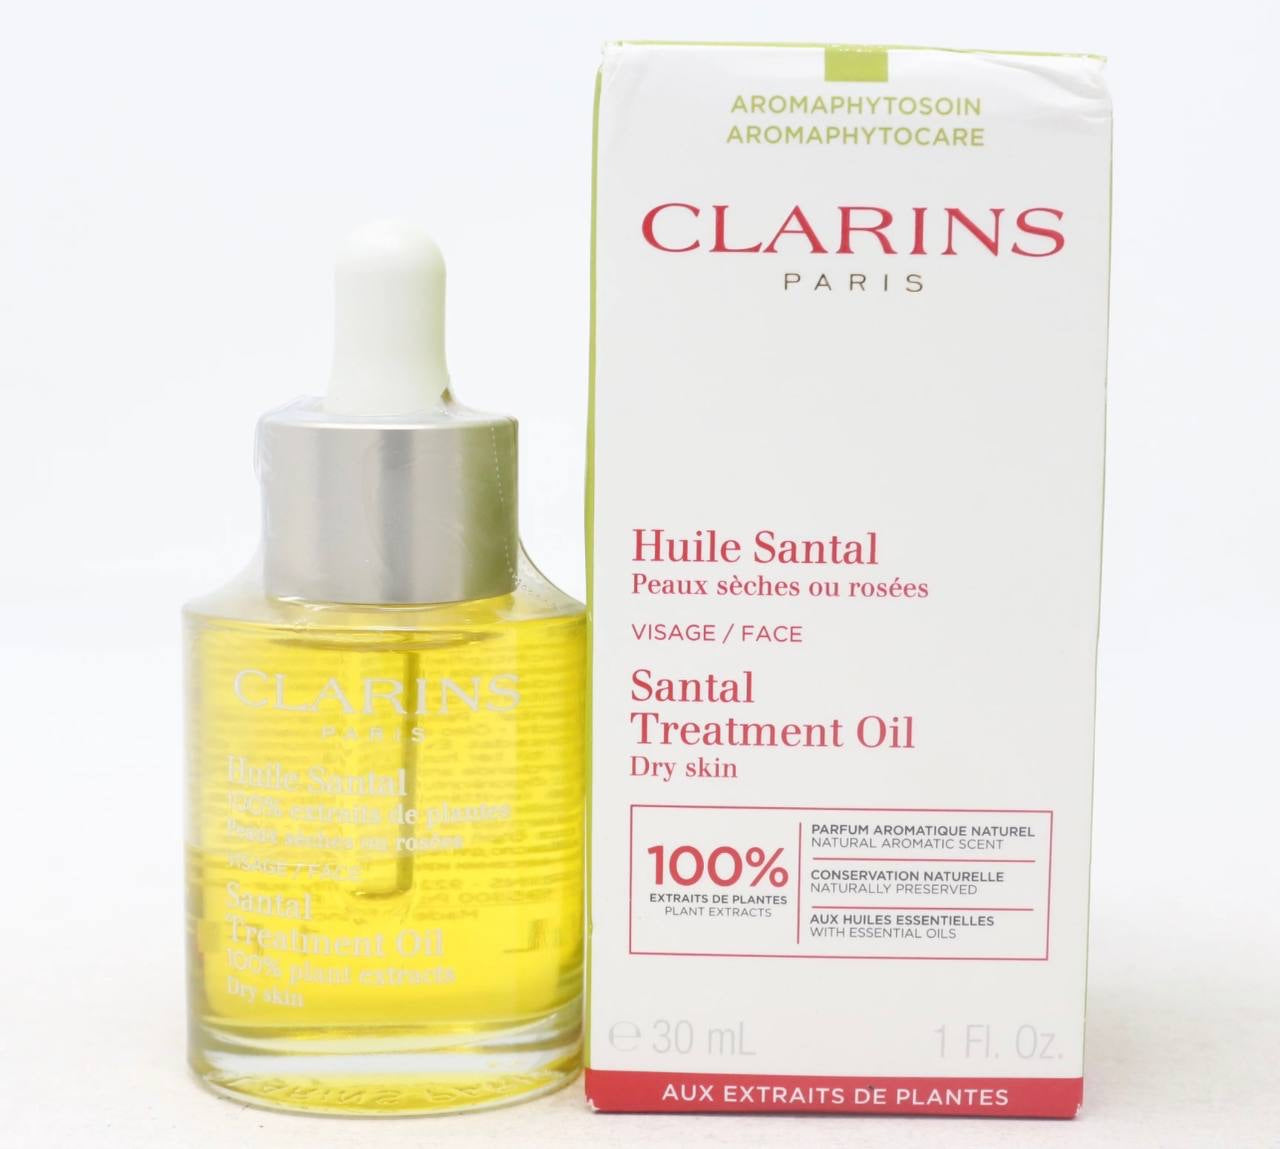 Clarins santal oil treatment